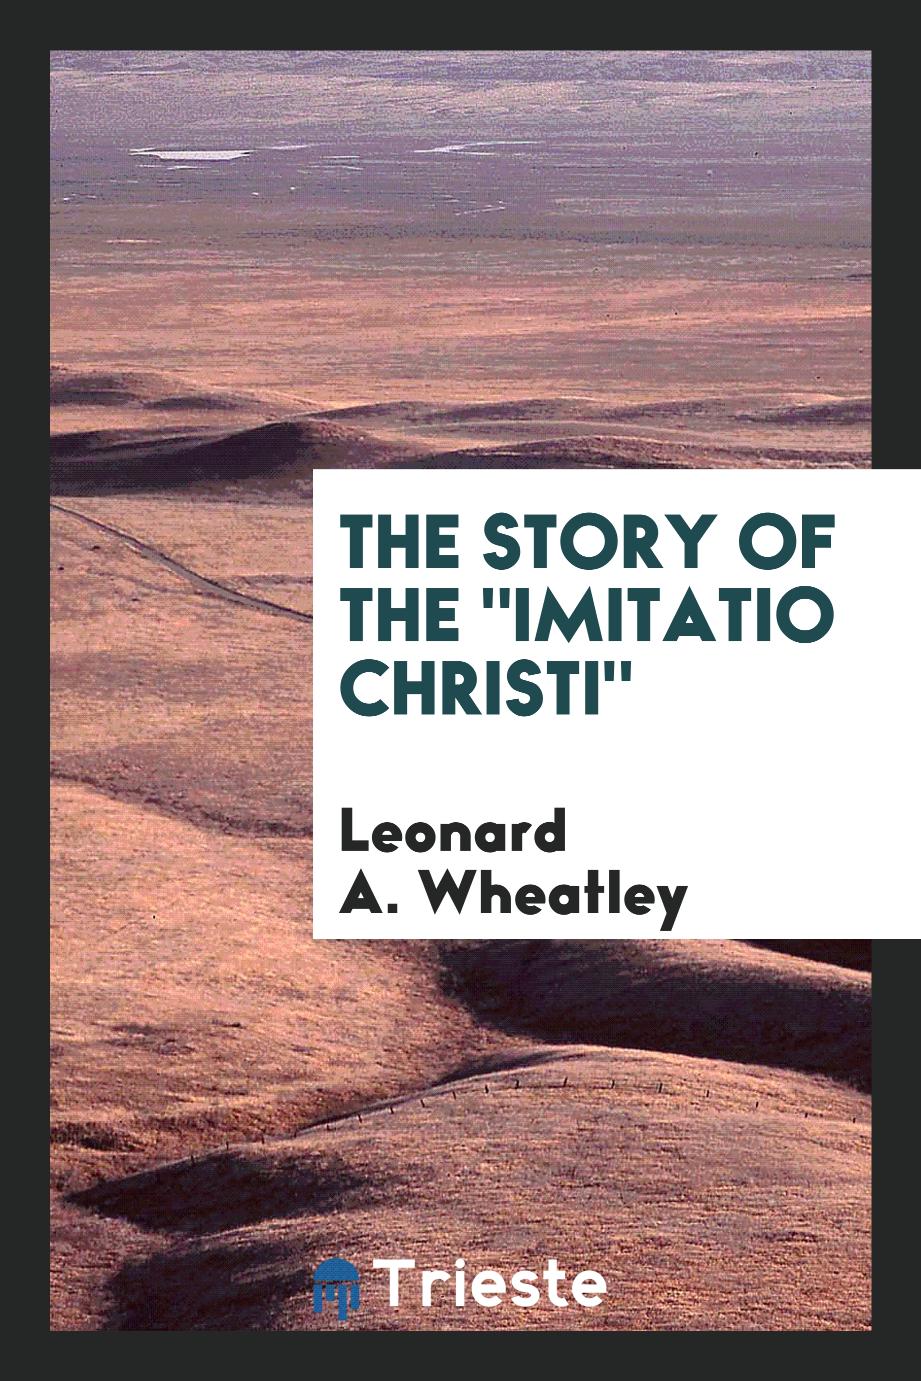 The story of the "Imitatio Christi"